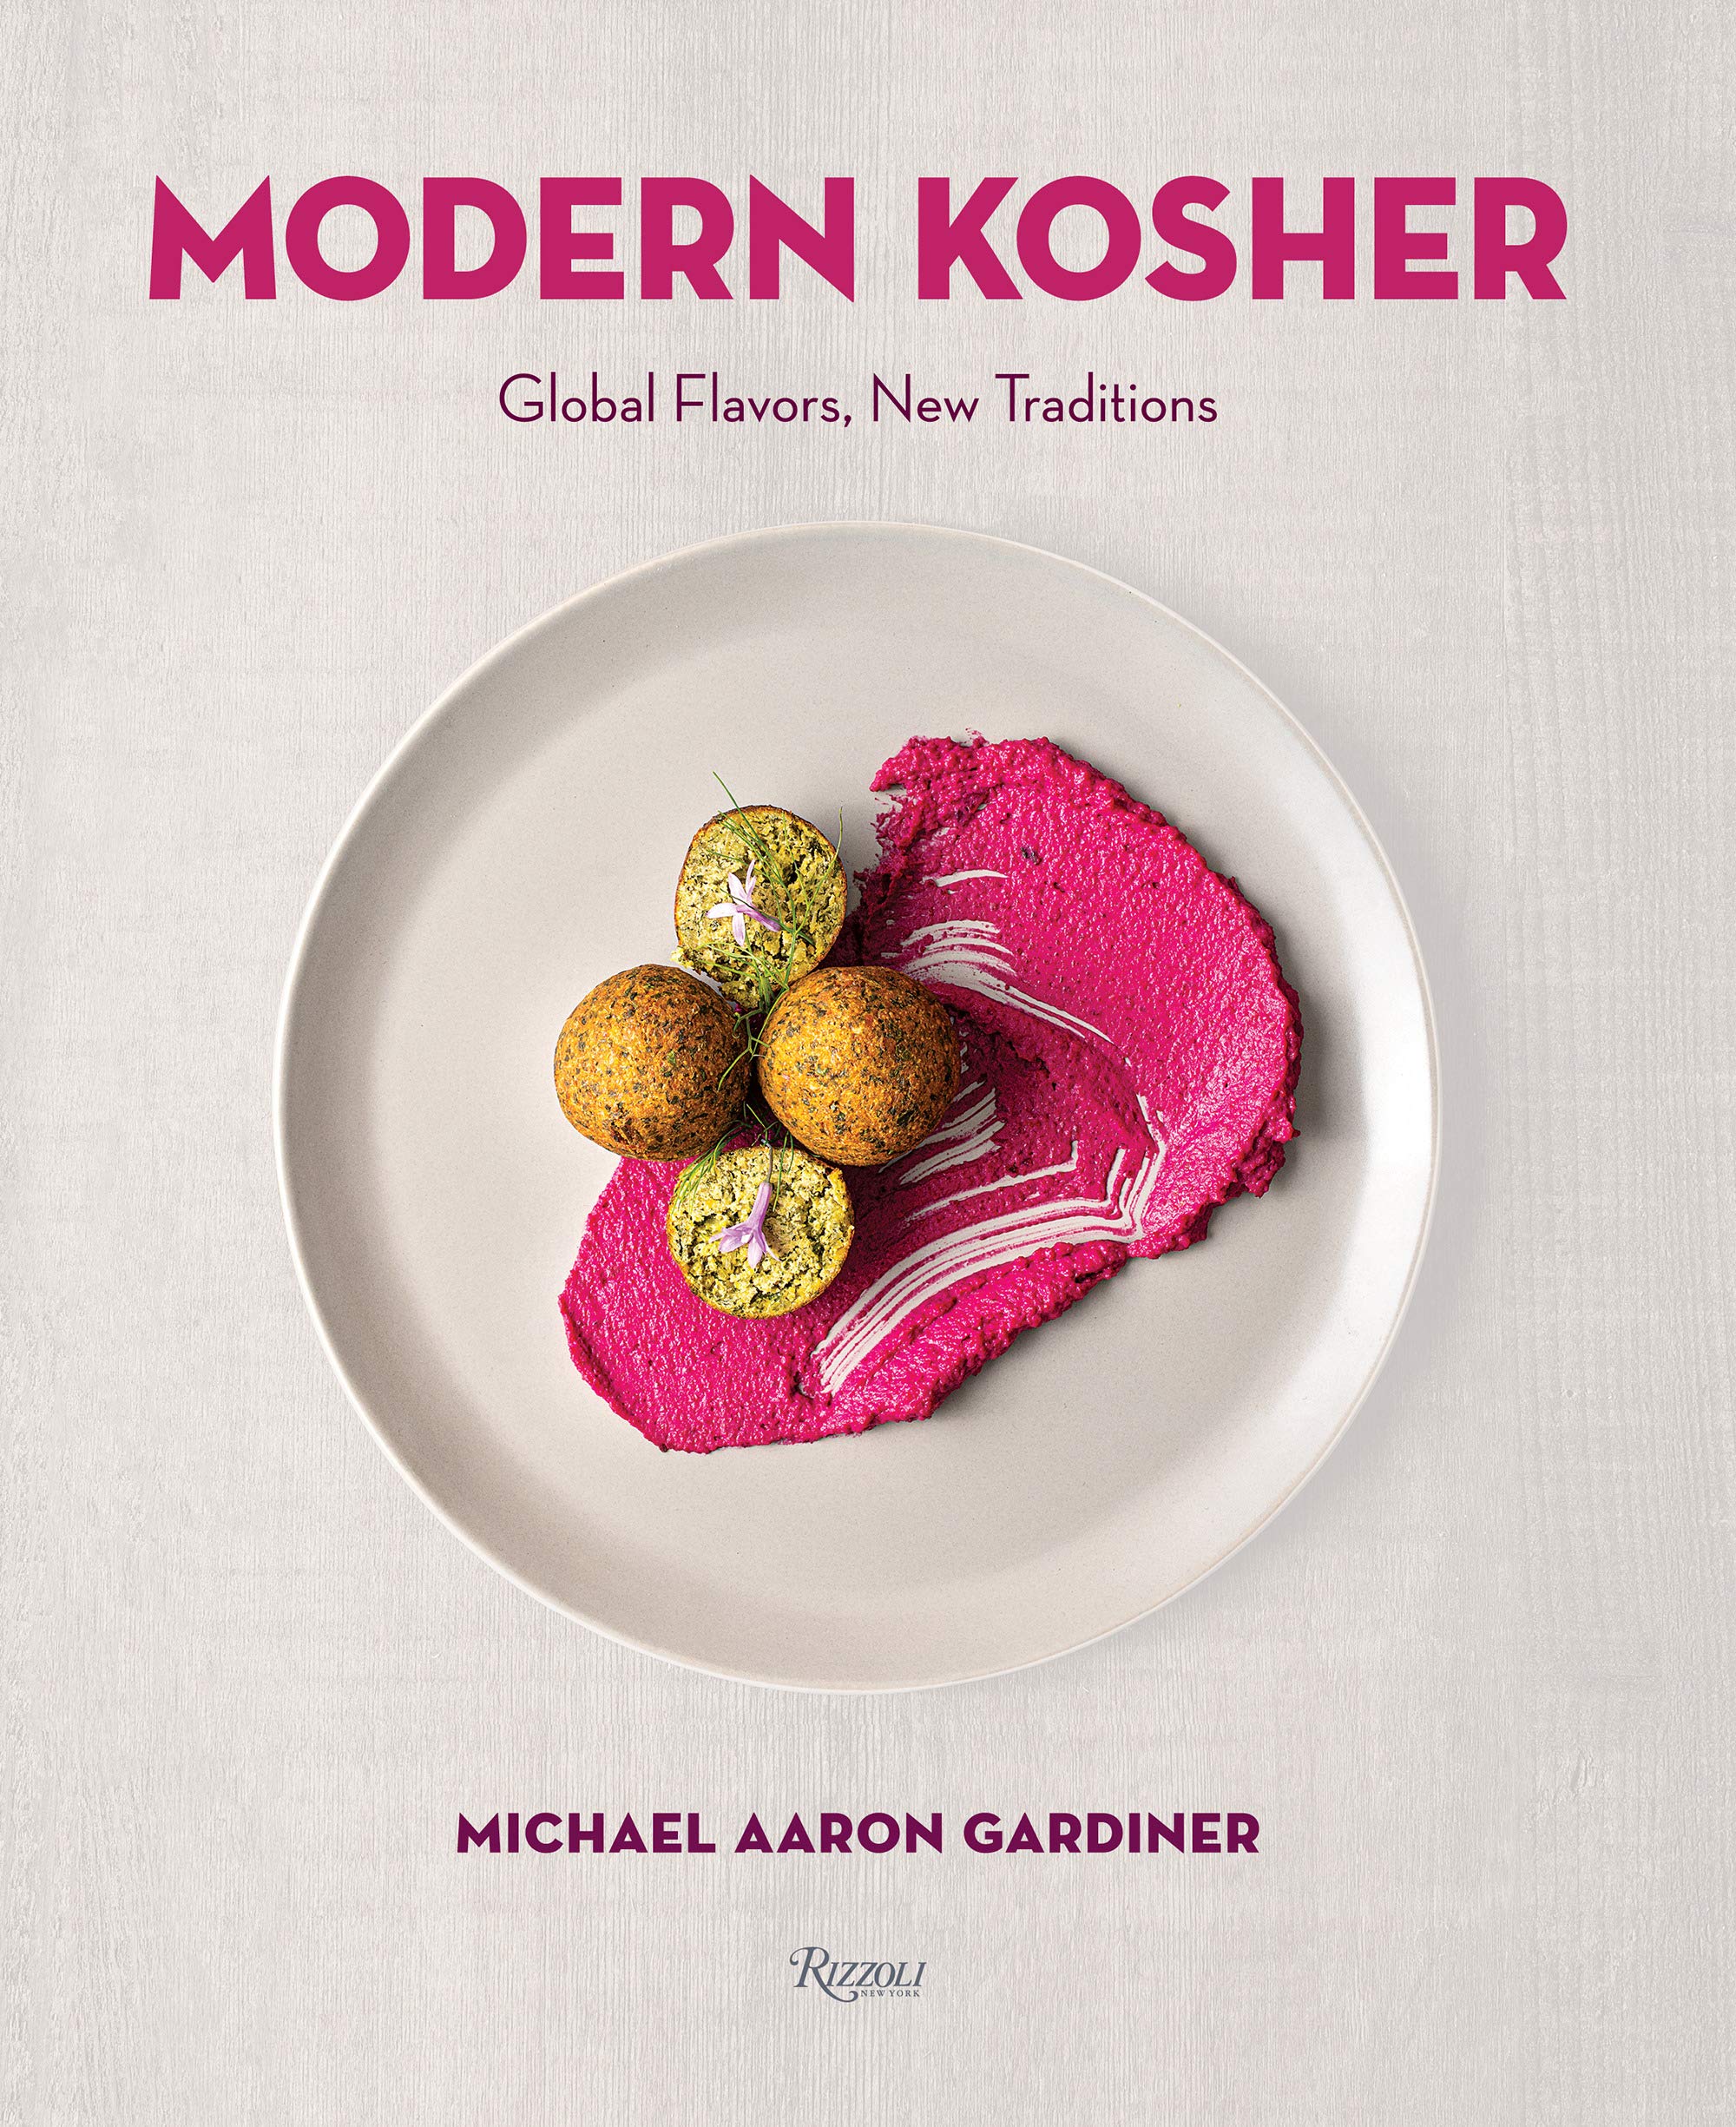 Modern Kosher: Global Flavors, New Traditions (Michael Aaron Gardiner)